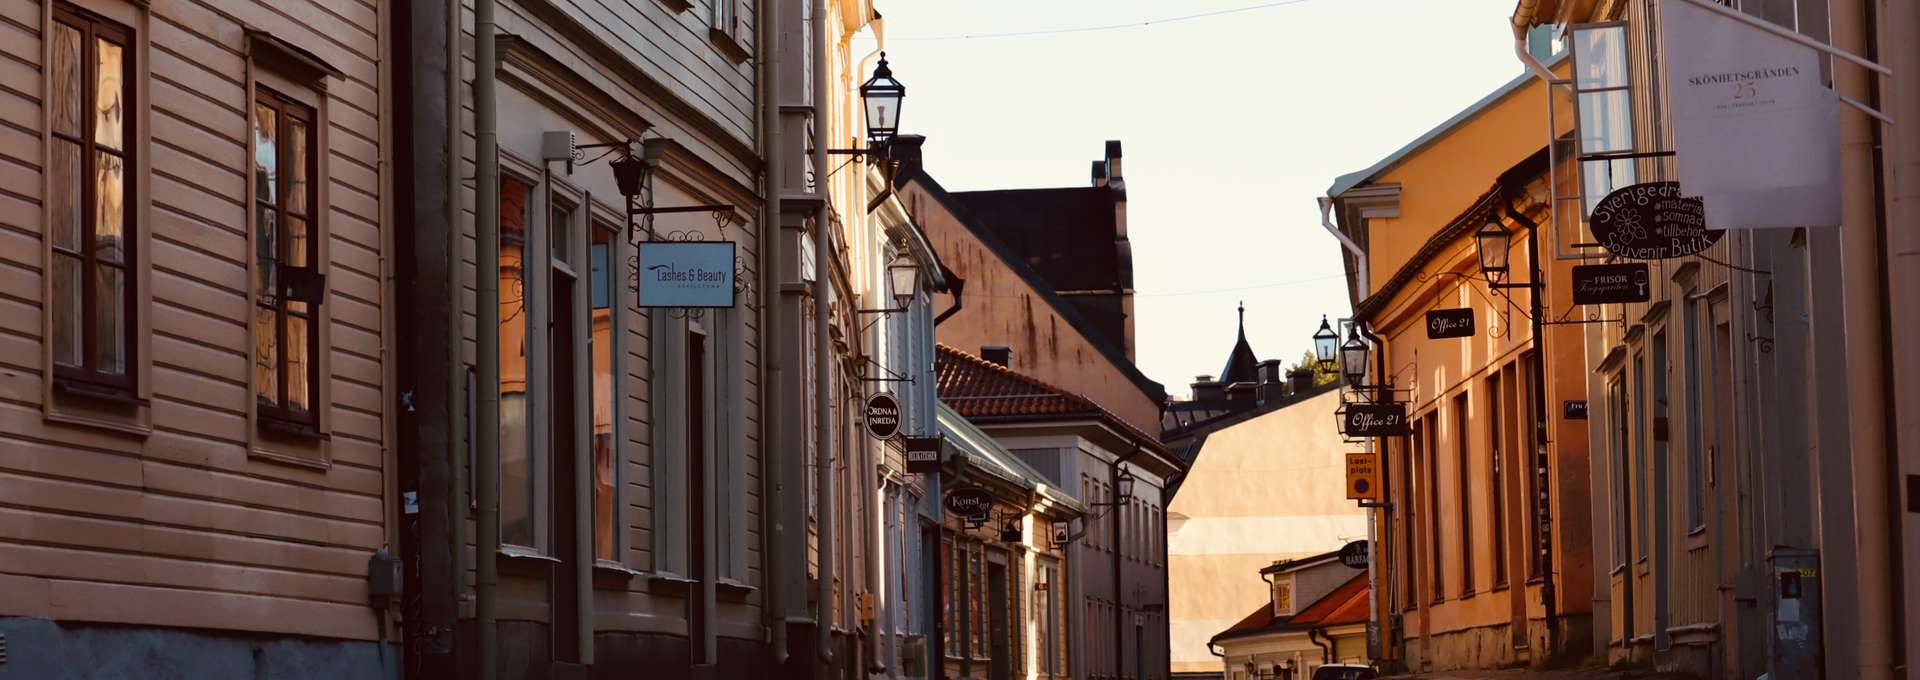 Köpmangatan, Gamla staden i Eskilstuna